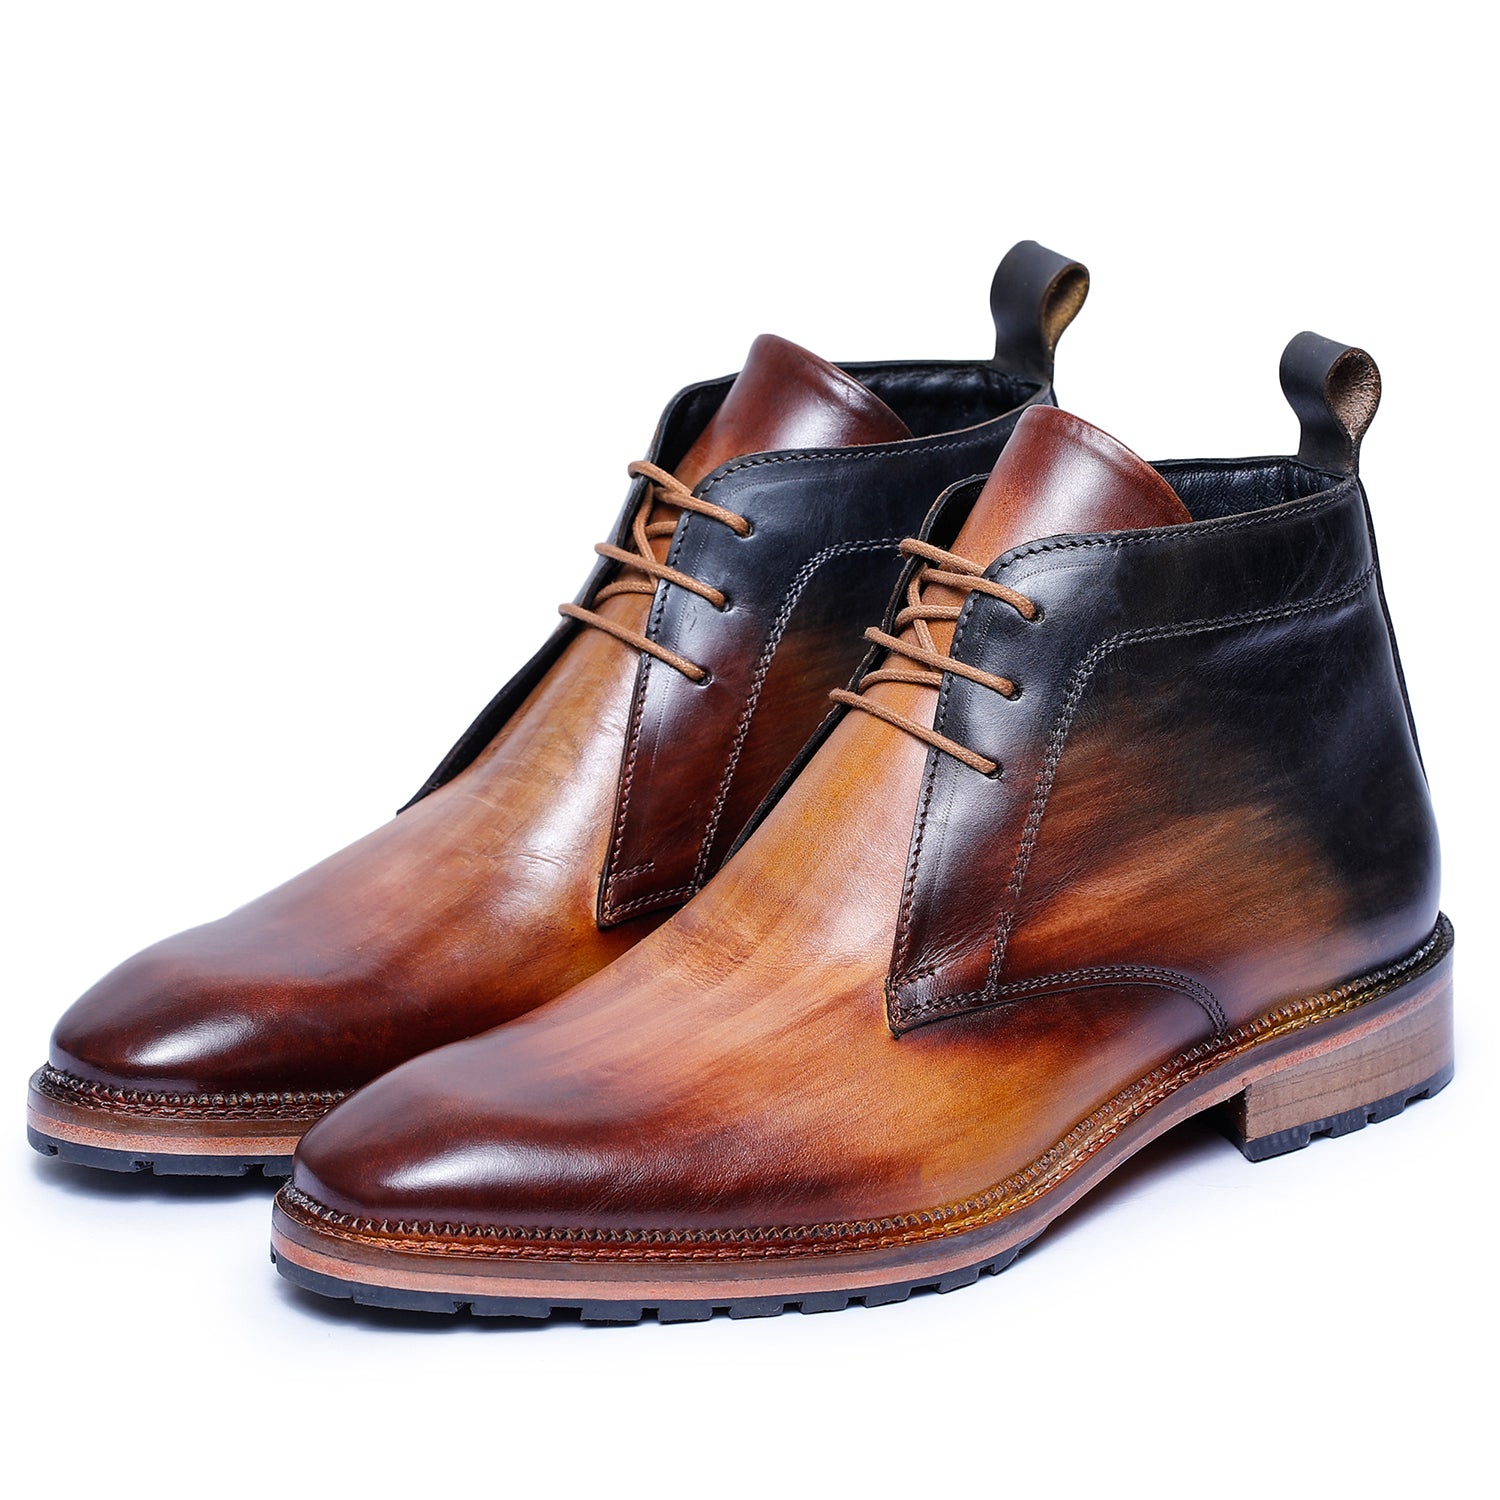 Buy custom made mens shoes  handmade italian leather dress shoes